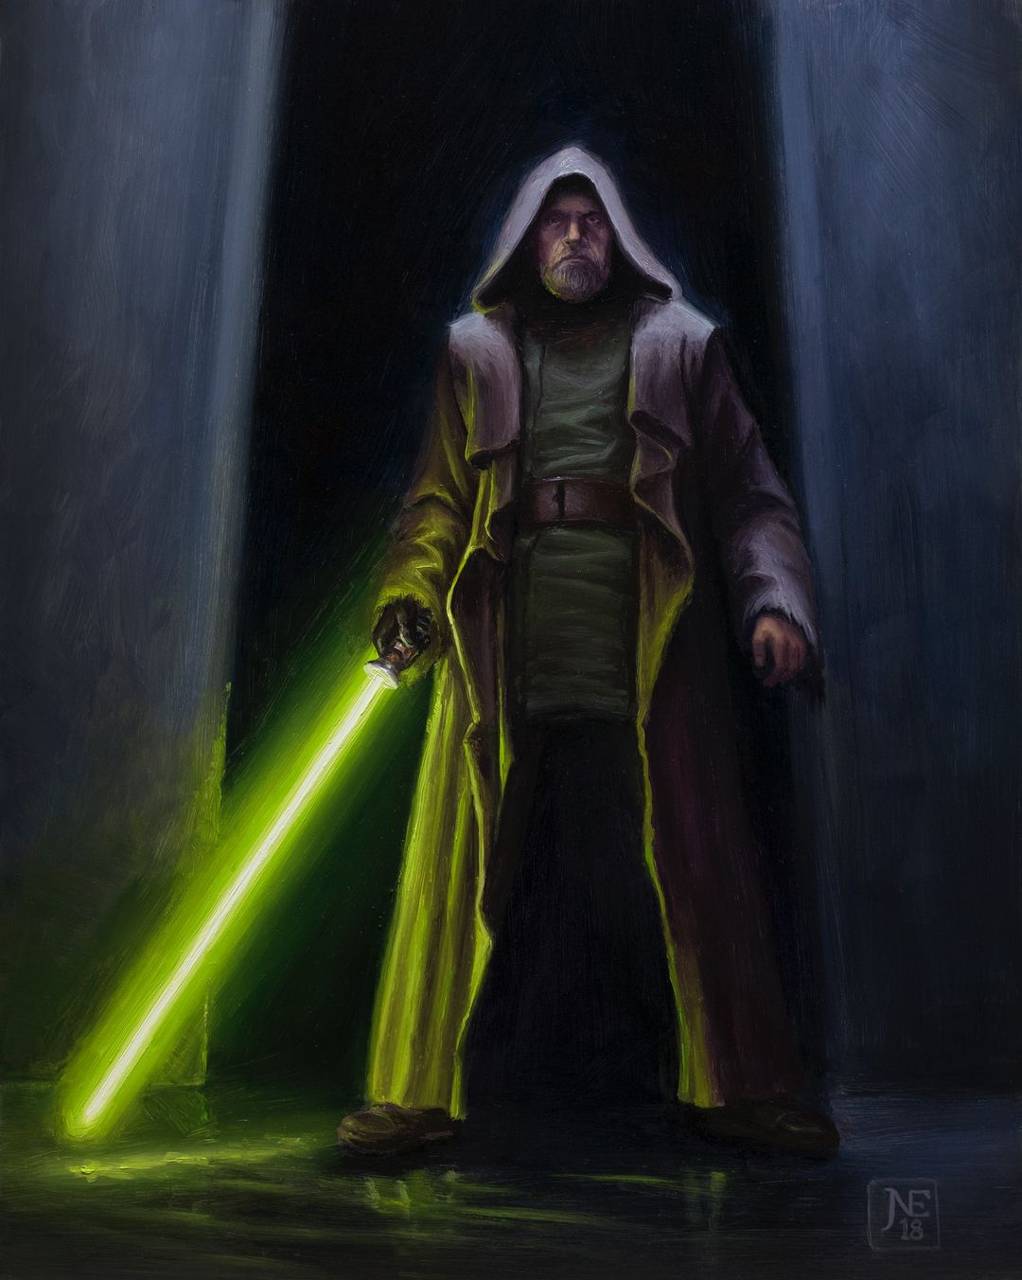 Luke Skywalker wallpaper